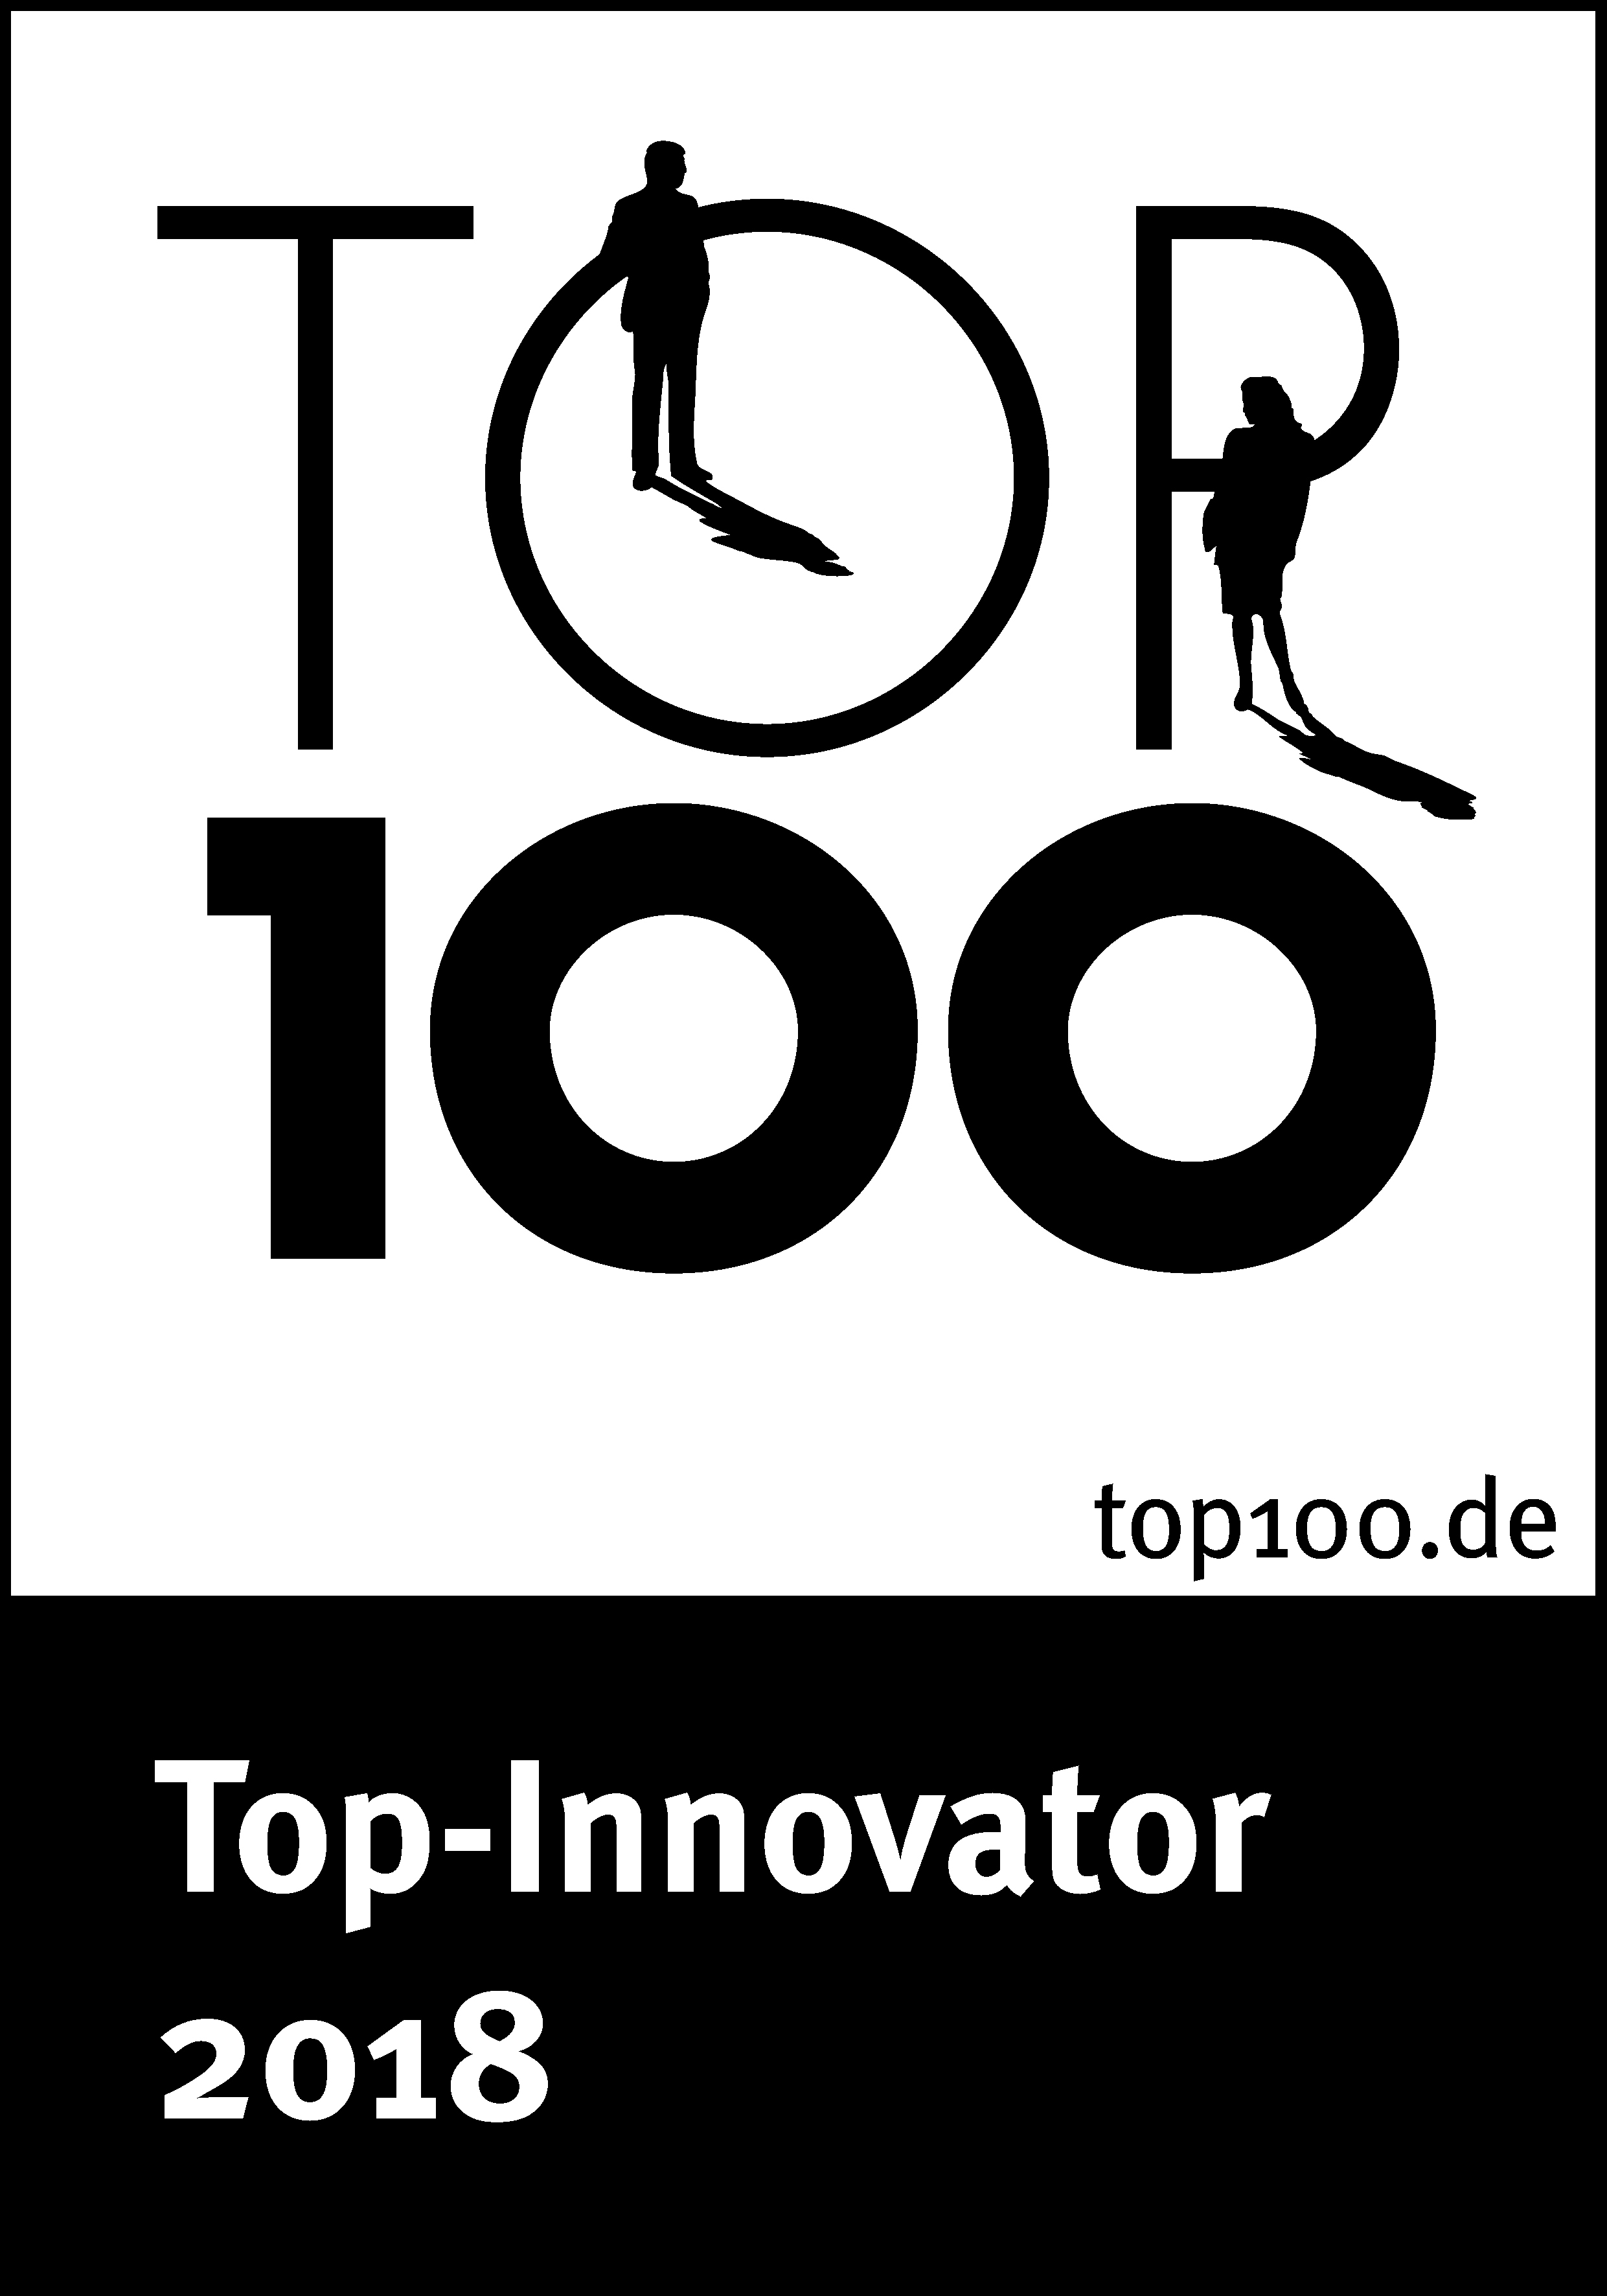 IVFP ist Top 100 Innovator